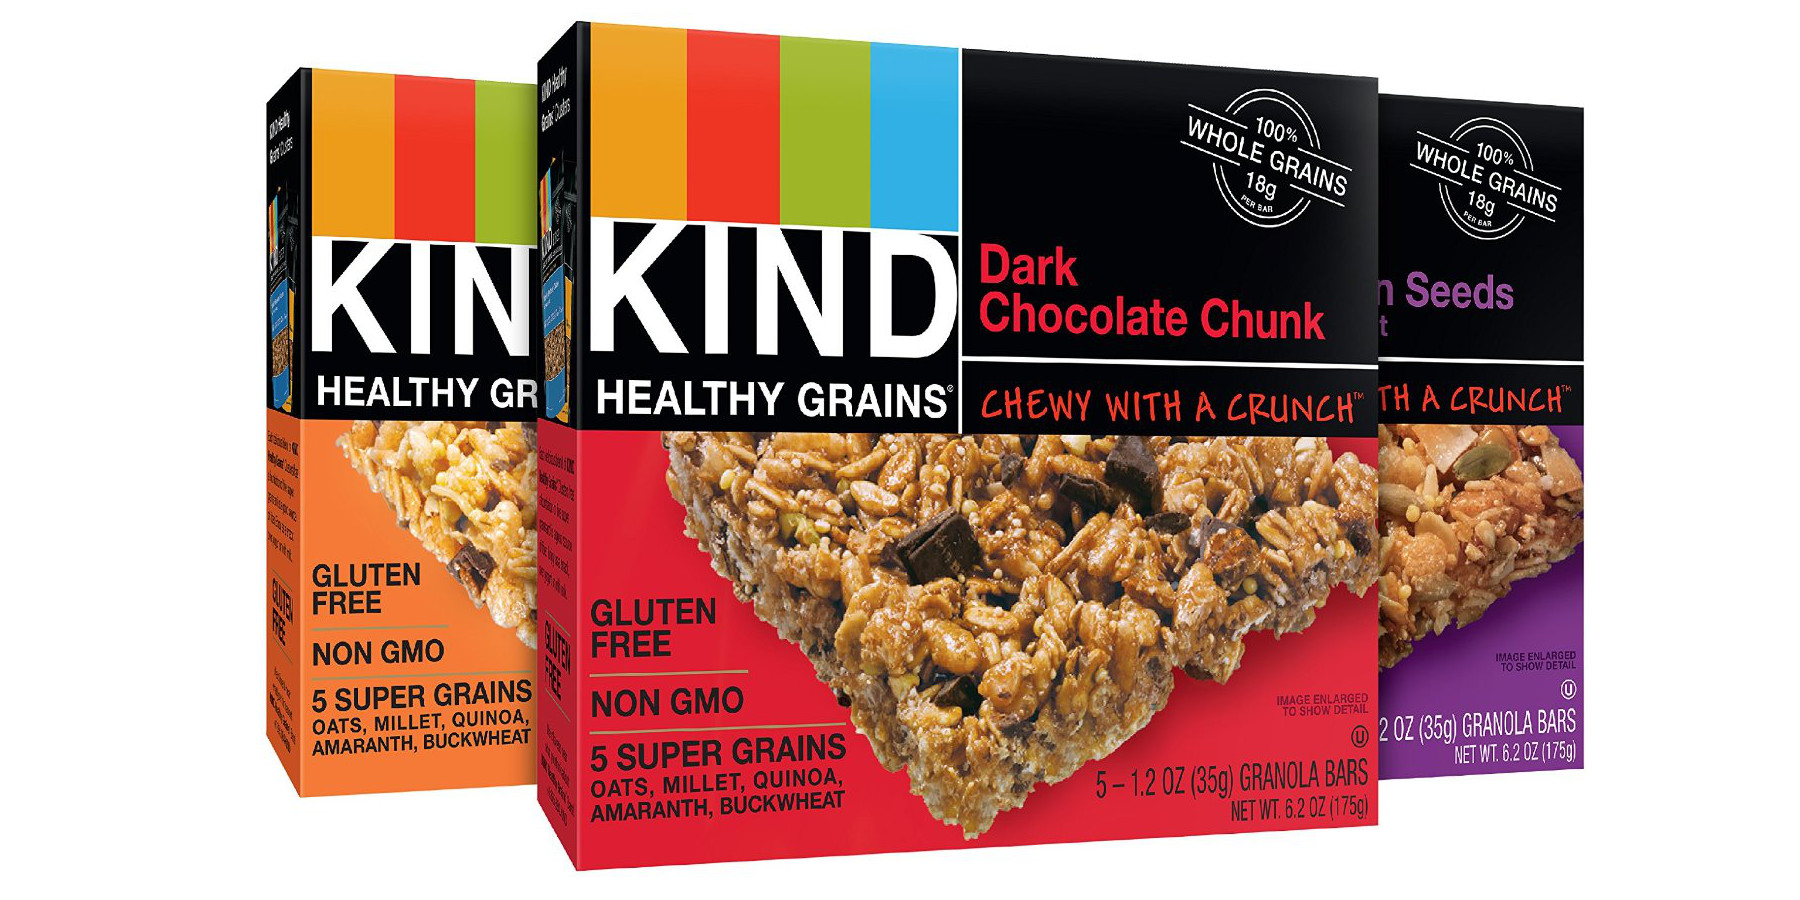 KIND Healthy Grains bars-6